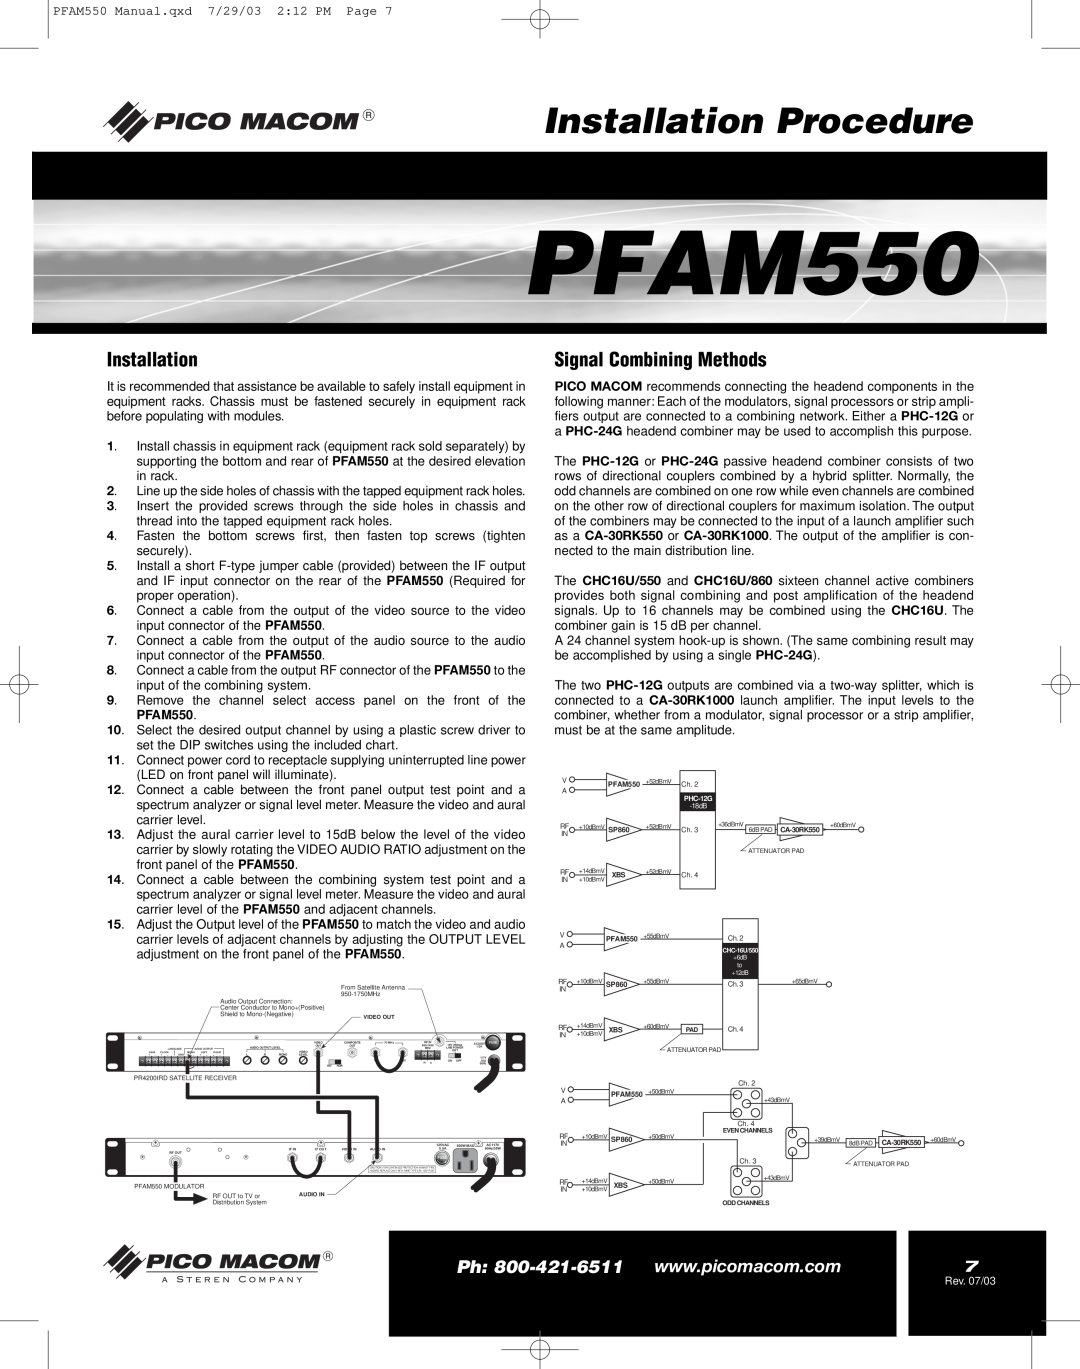 Pico Macom PFAM550 operation manual Installation Procedure, Signal Combining Methods 